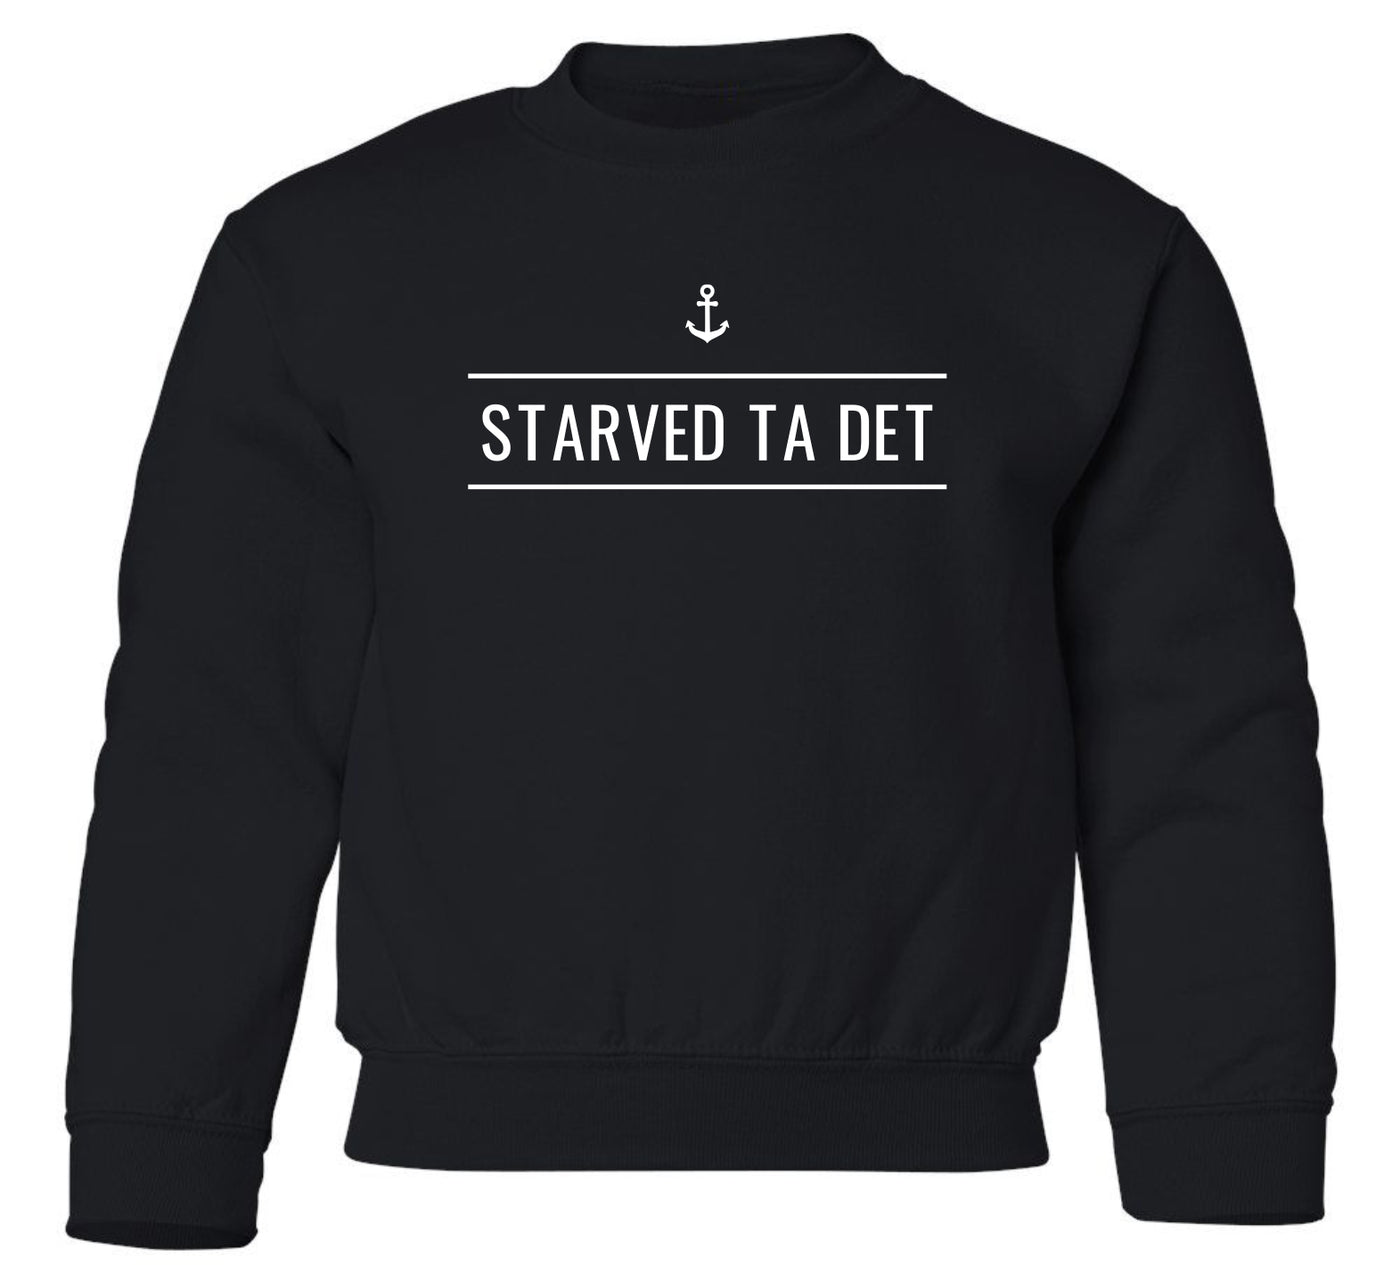 "Starved Ta Det" Toddler/Youth Crewneck Sweatshirt